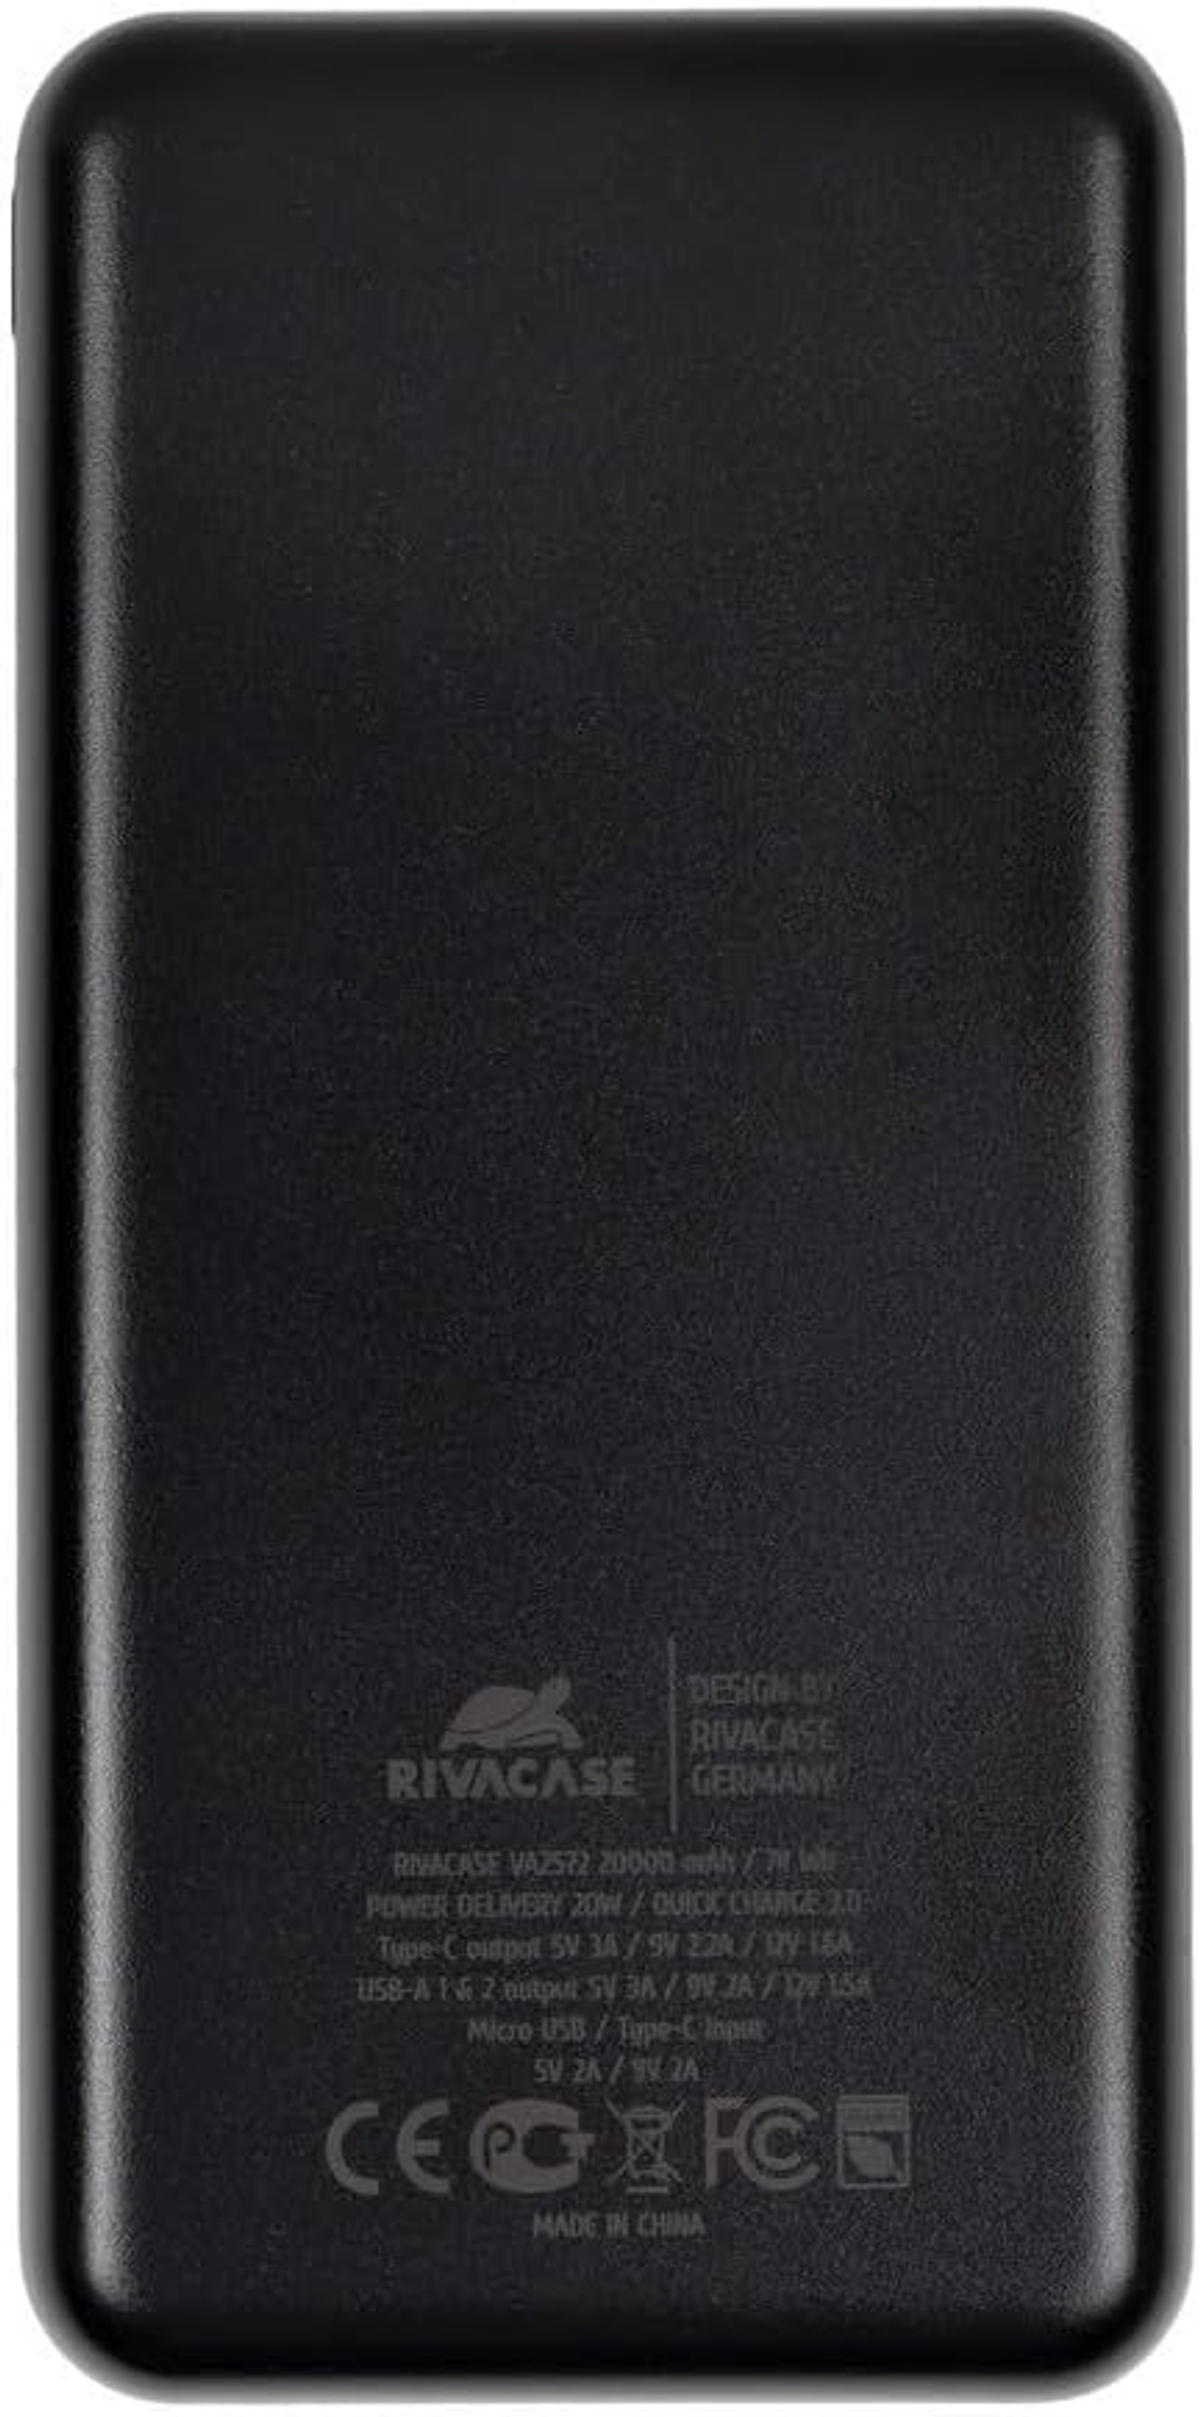 RIVACASE Powerbank Schwarz mAh VA2572 Black 20000